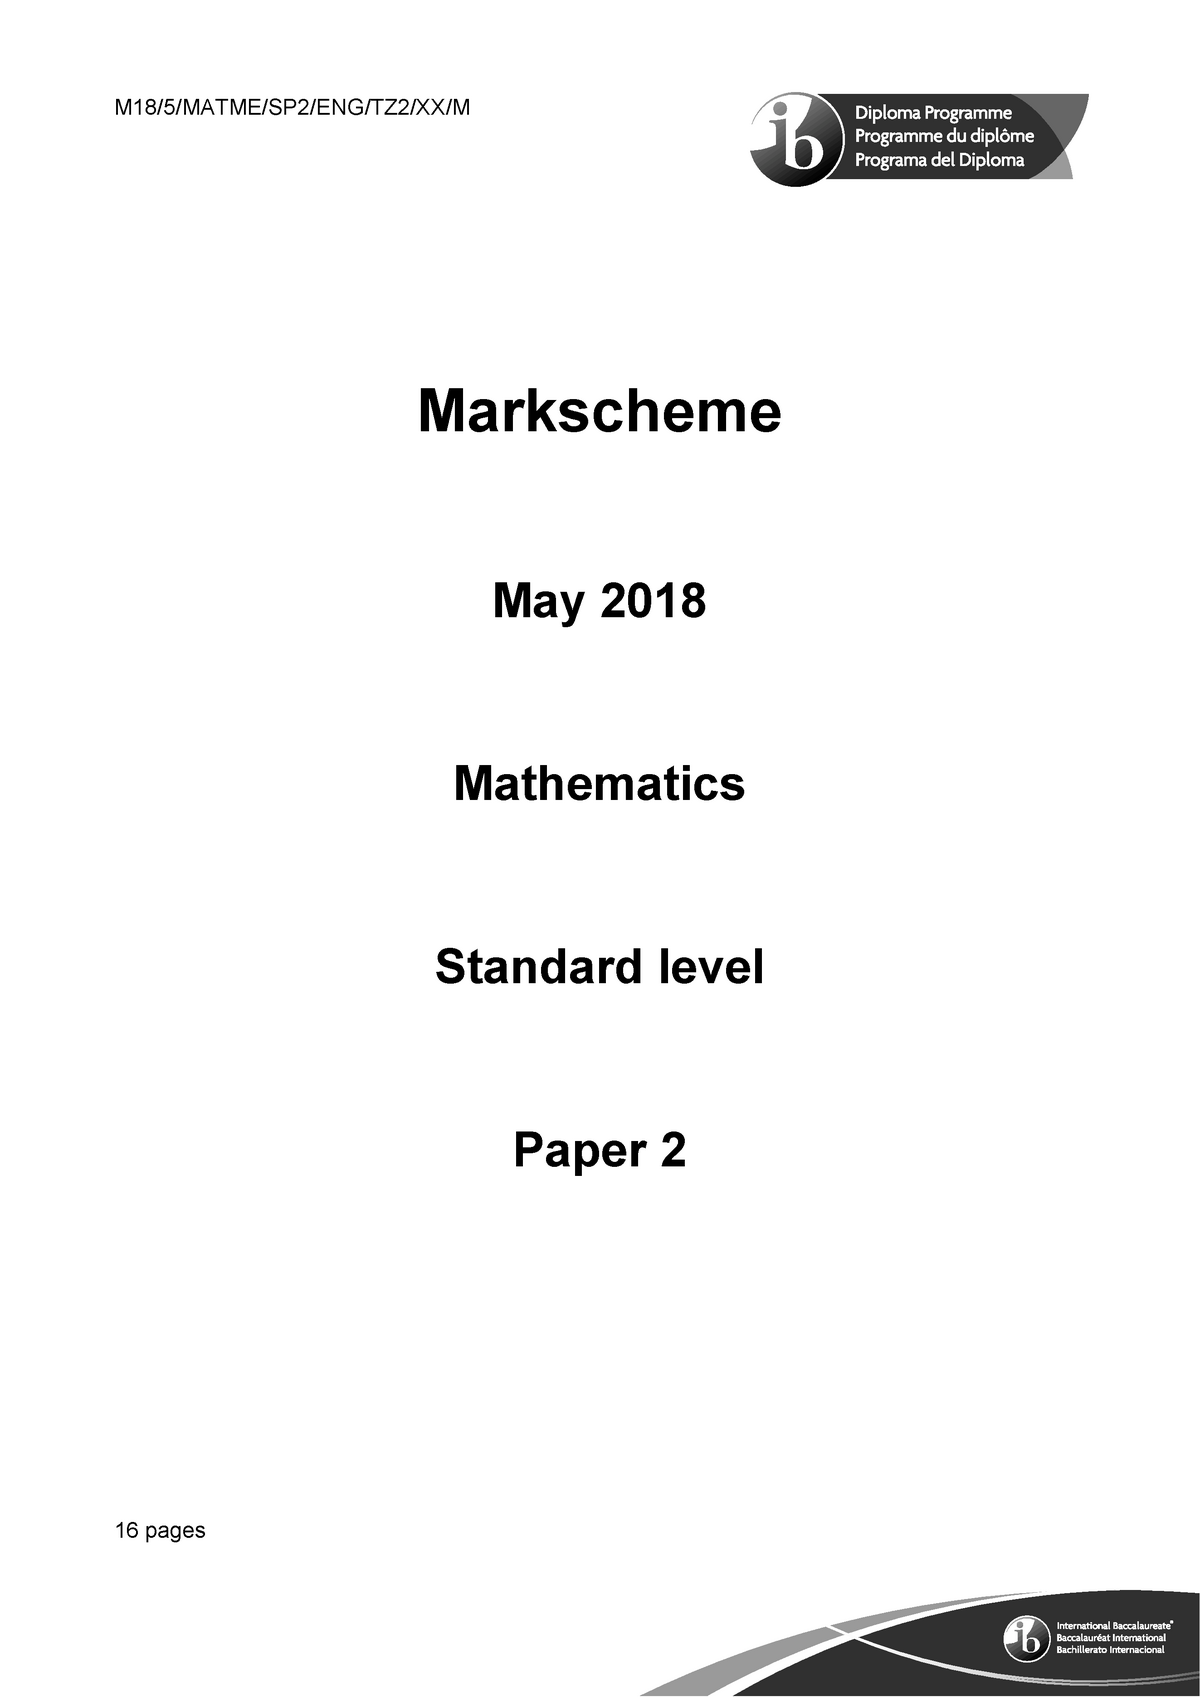 Mathematics paper 2 TZ2 SL markscheme - M18/5/MATME/SP2/ENG/TZ2/XX 